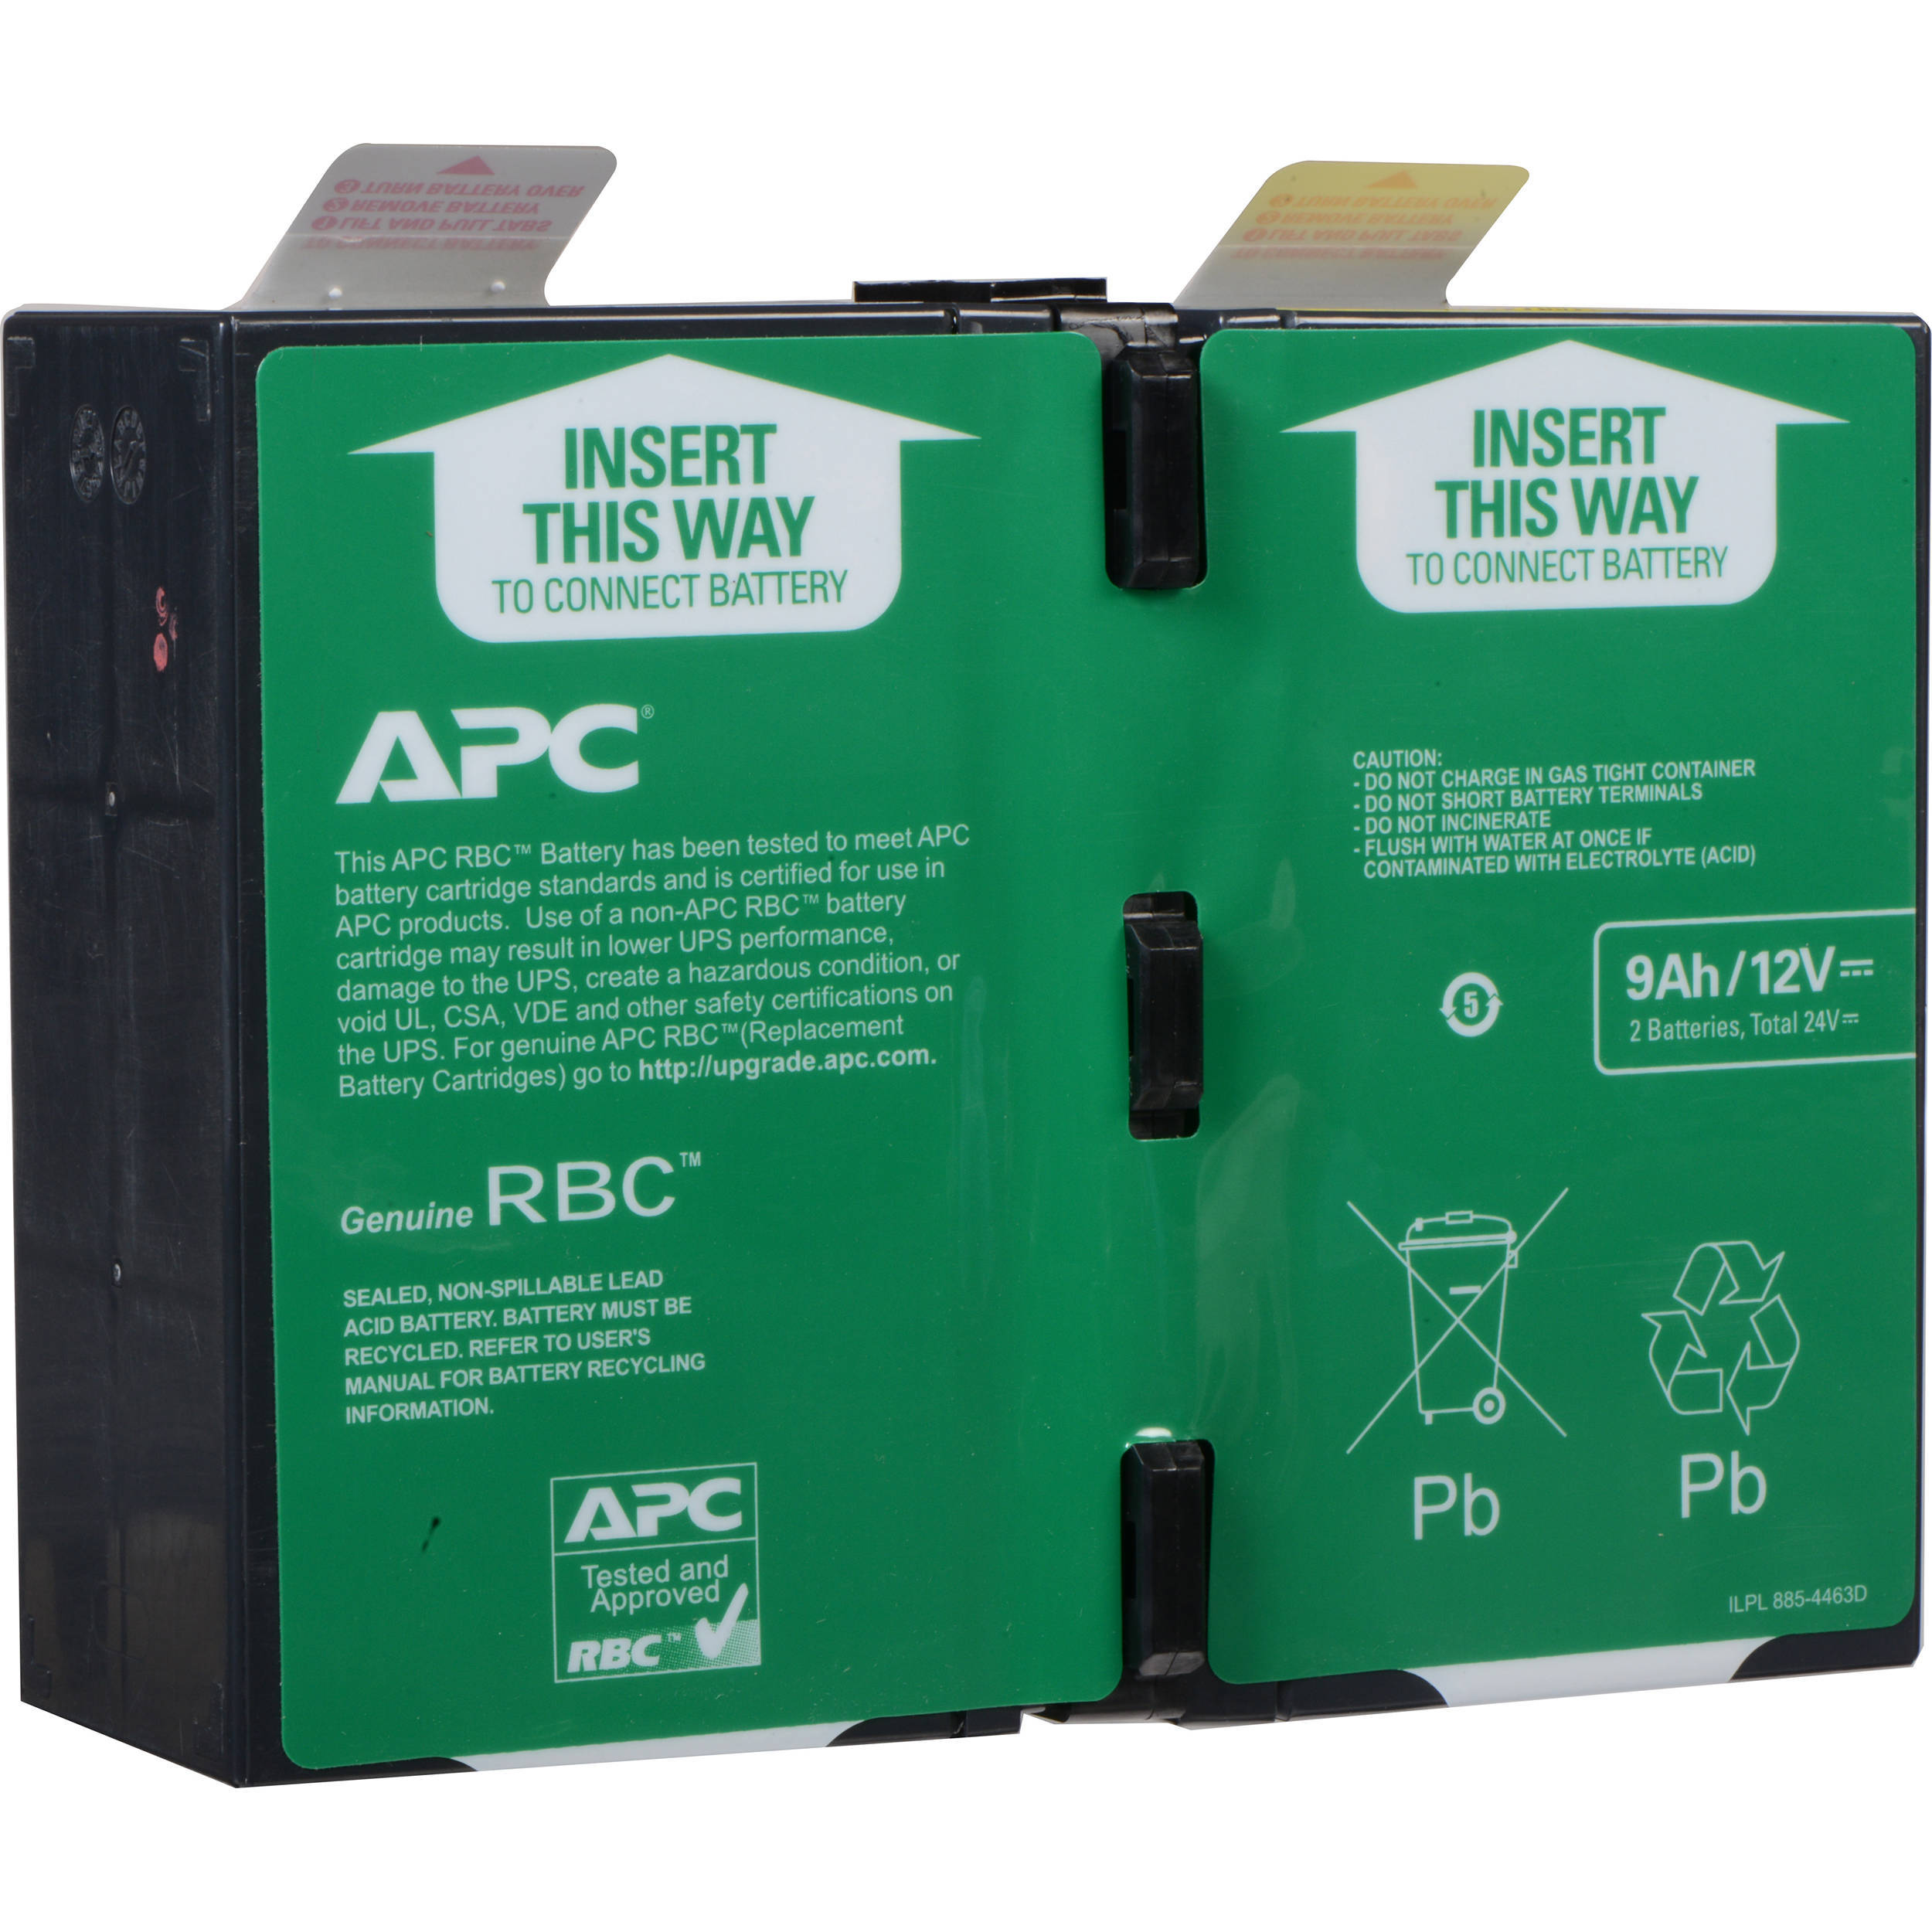 Apc ups battery. Apcrbc124 батарея APC. Батарея аккумуляторная APC rbc124. Аккумуляторная батарея APC by Schneider Electric apcrbc124 9 а·ч. APC Replacement Battery Cartridge #124.